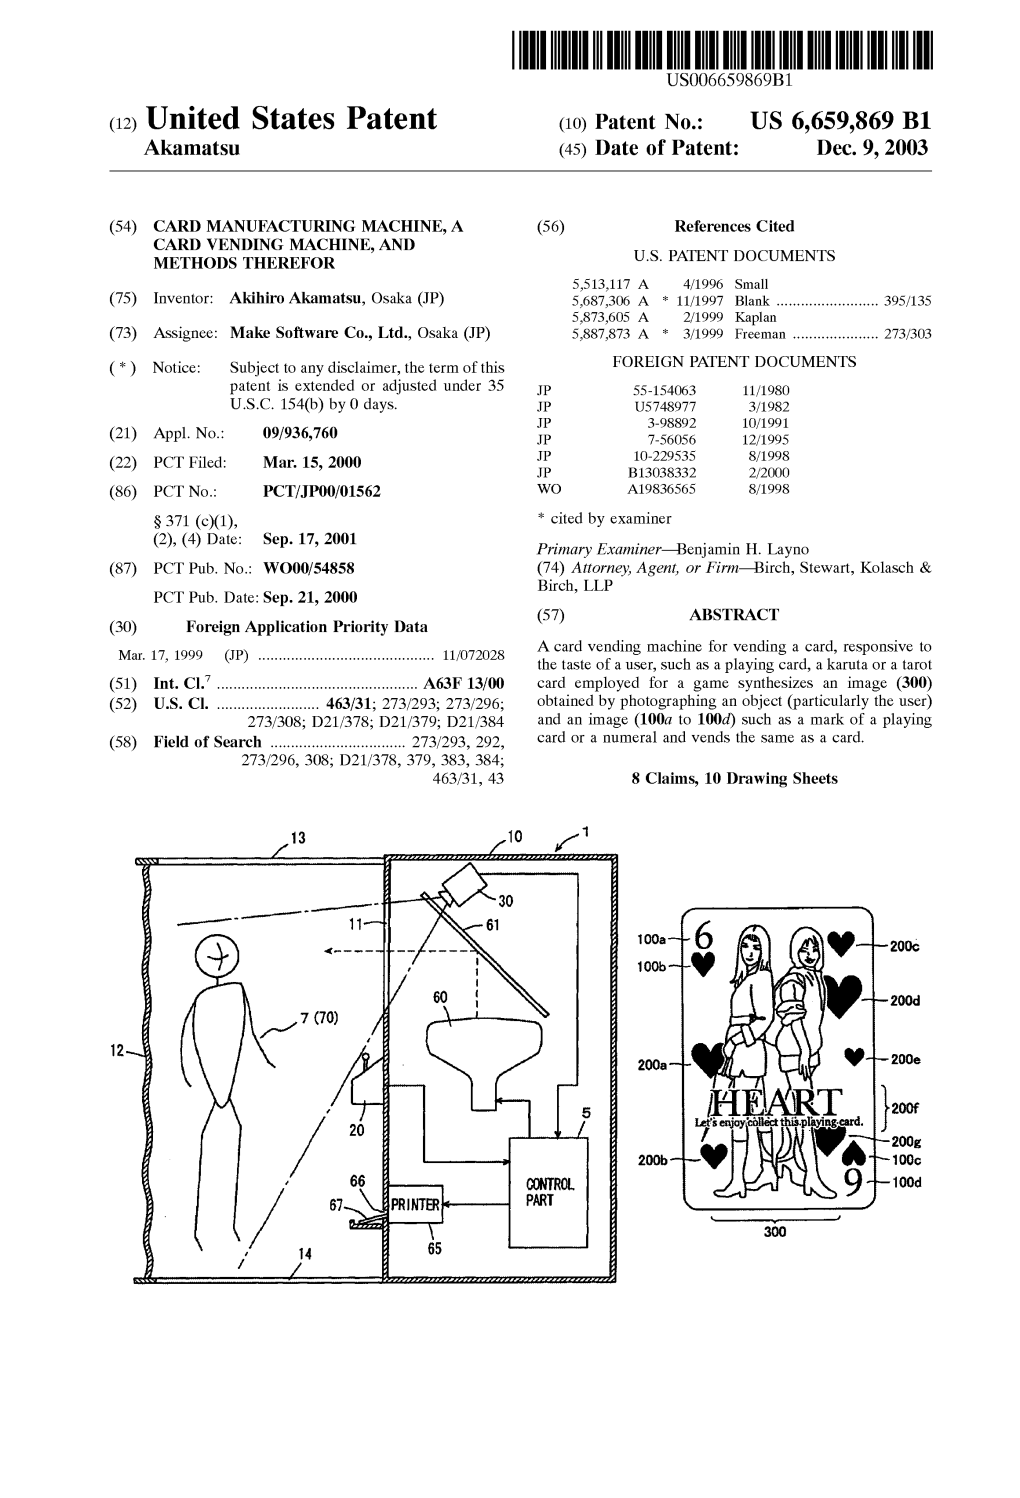 (12) United States Patent (10) Patent N0.: US 6,659,869 B1 Akamatsu (45) Date of Patent: Dec